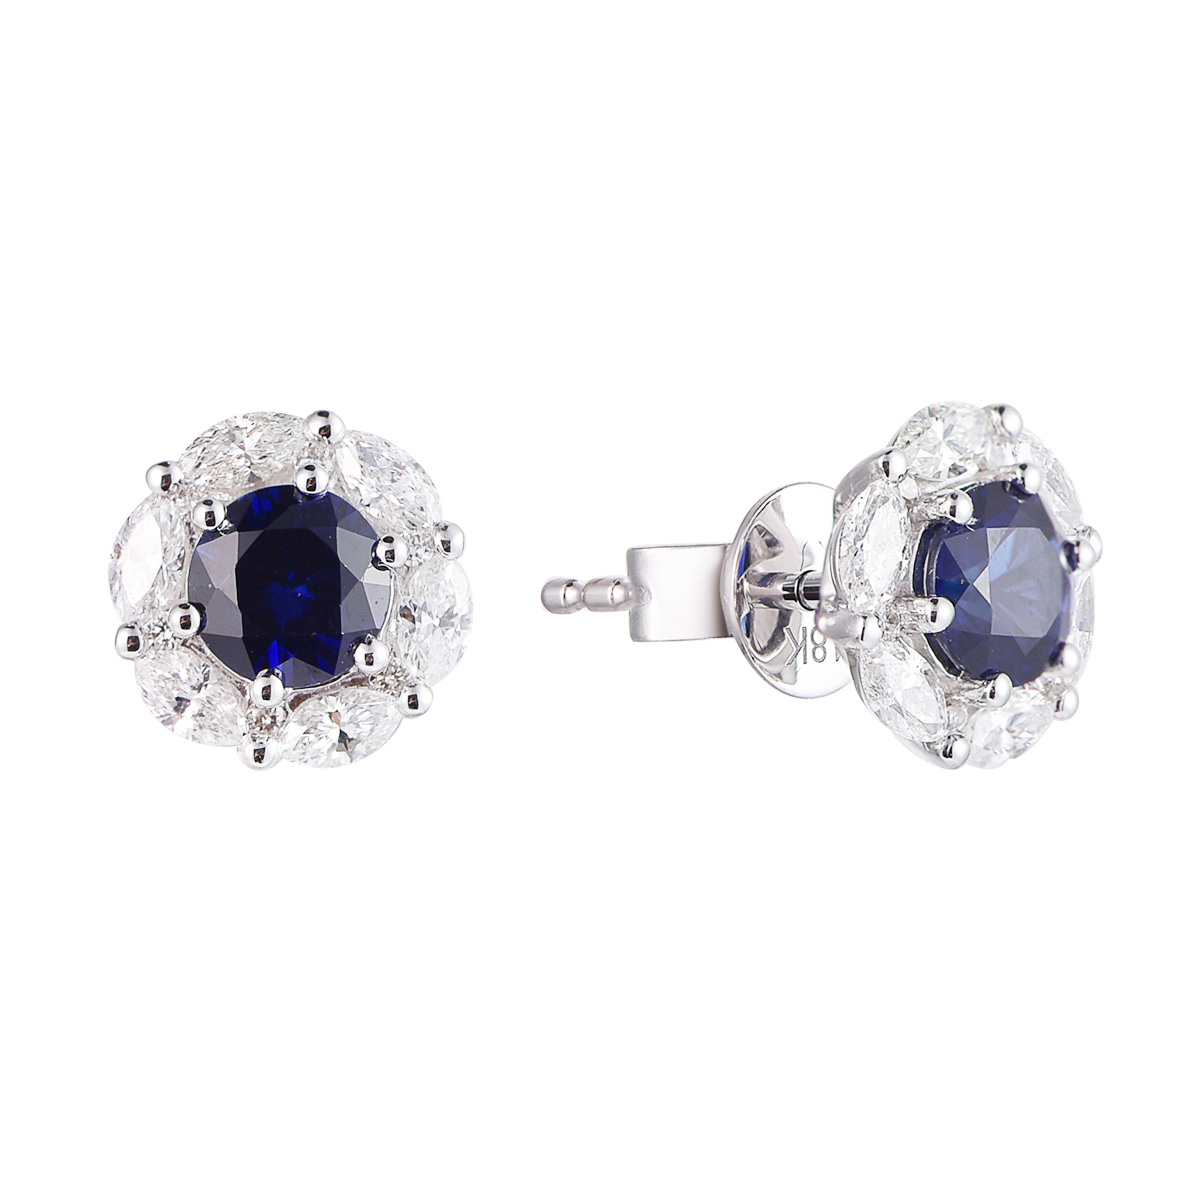 DI45073W 18K white gold blue sapphire earrings